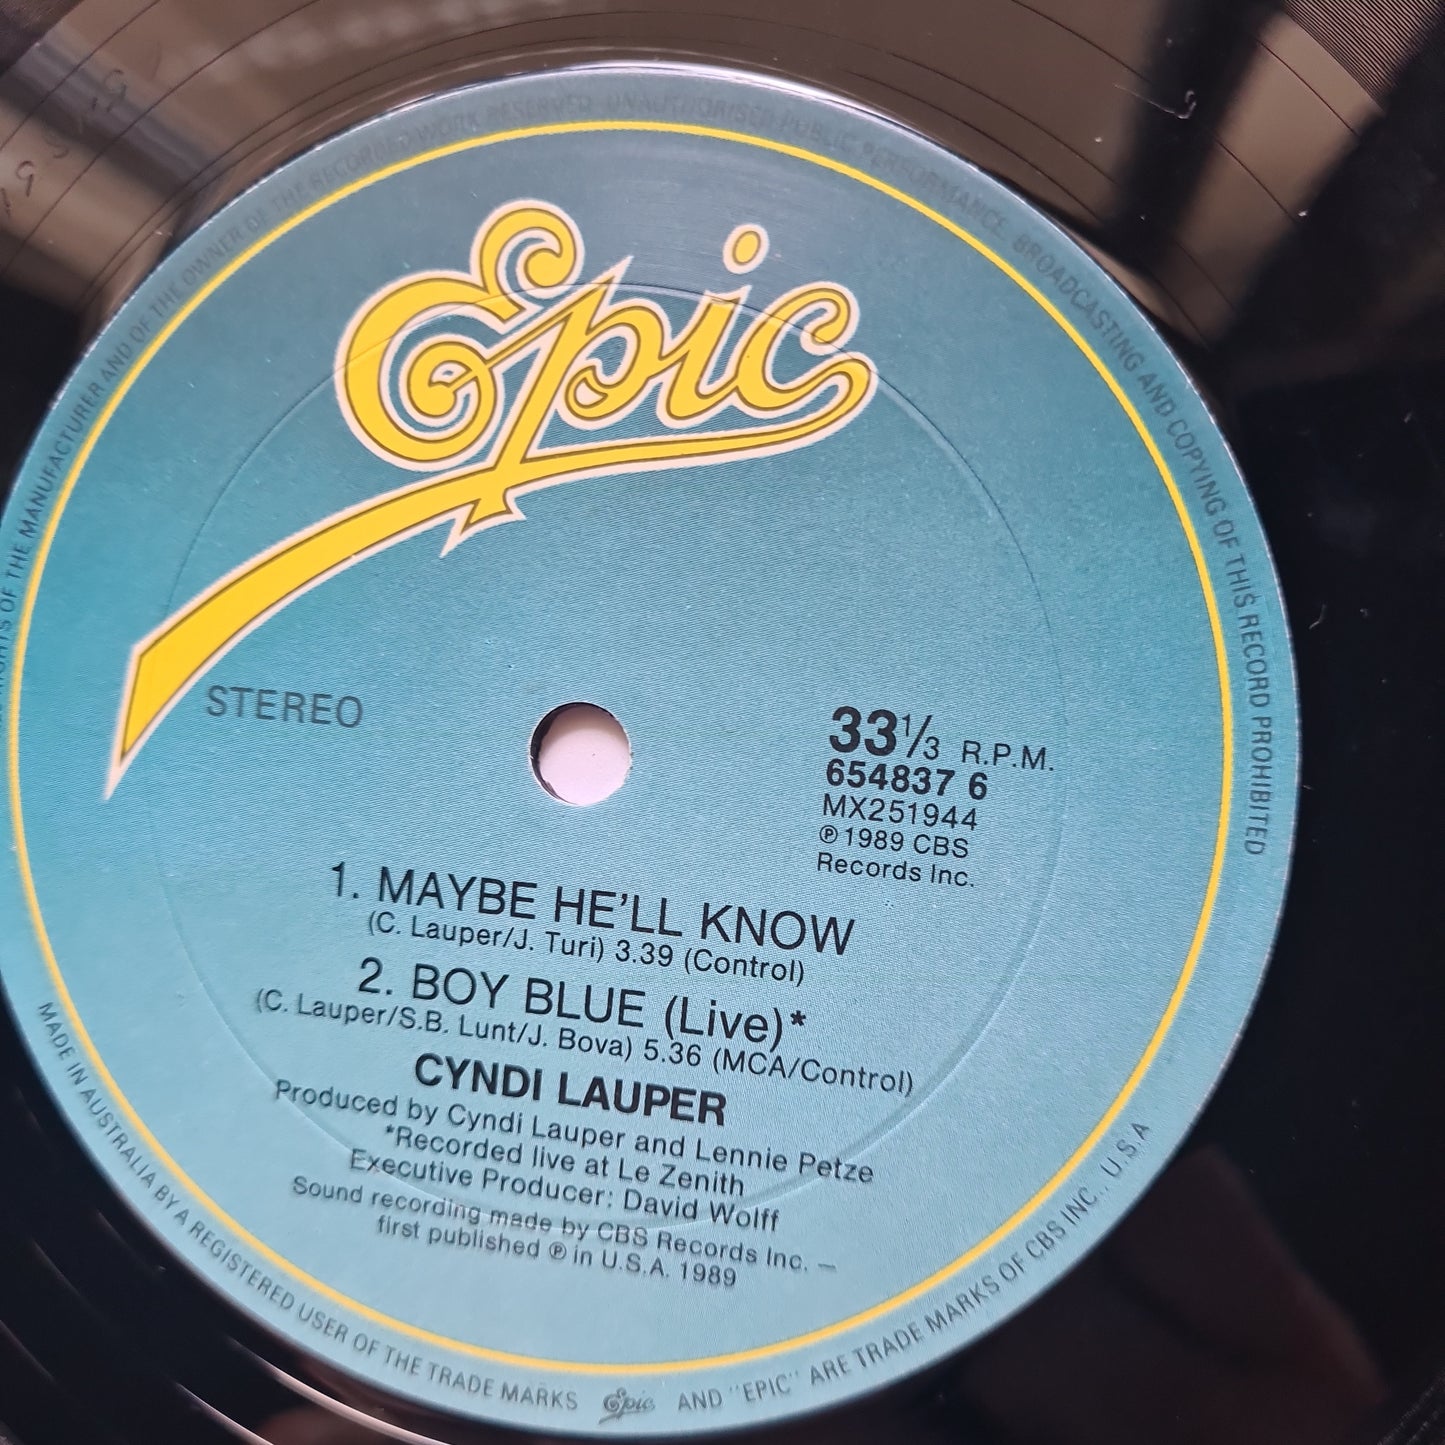 Cyndi Lauper – I Drove All Night - 1989 - 12inch Single Vinyl Record